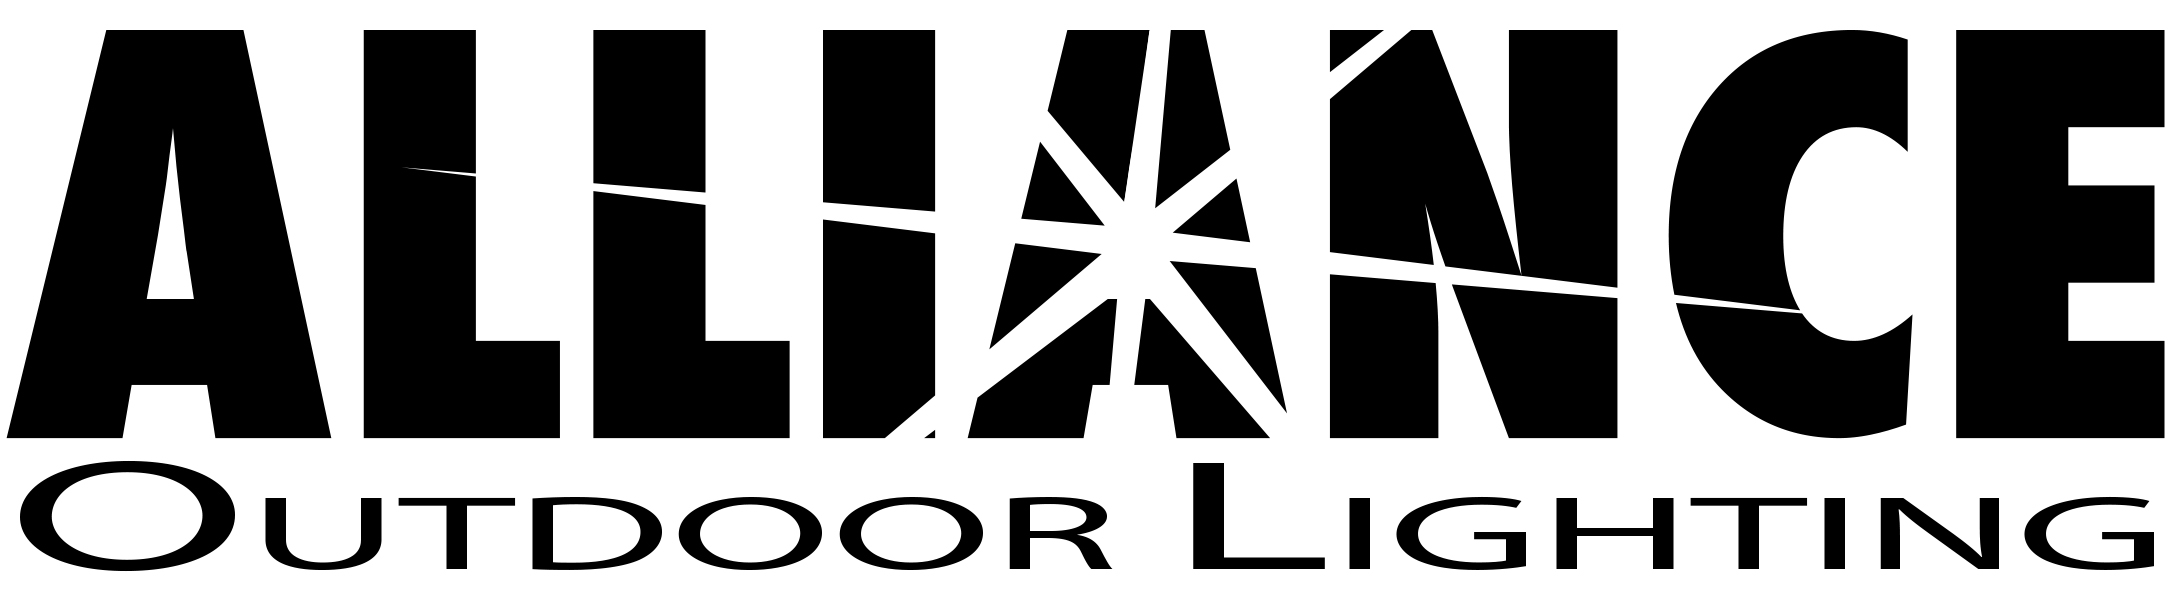 Alliance Outdoor Lighting logo